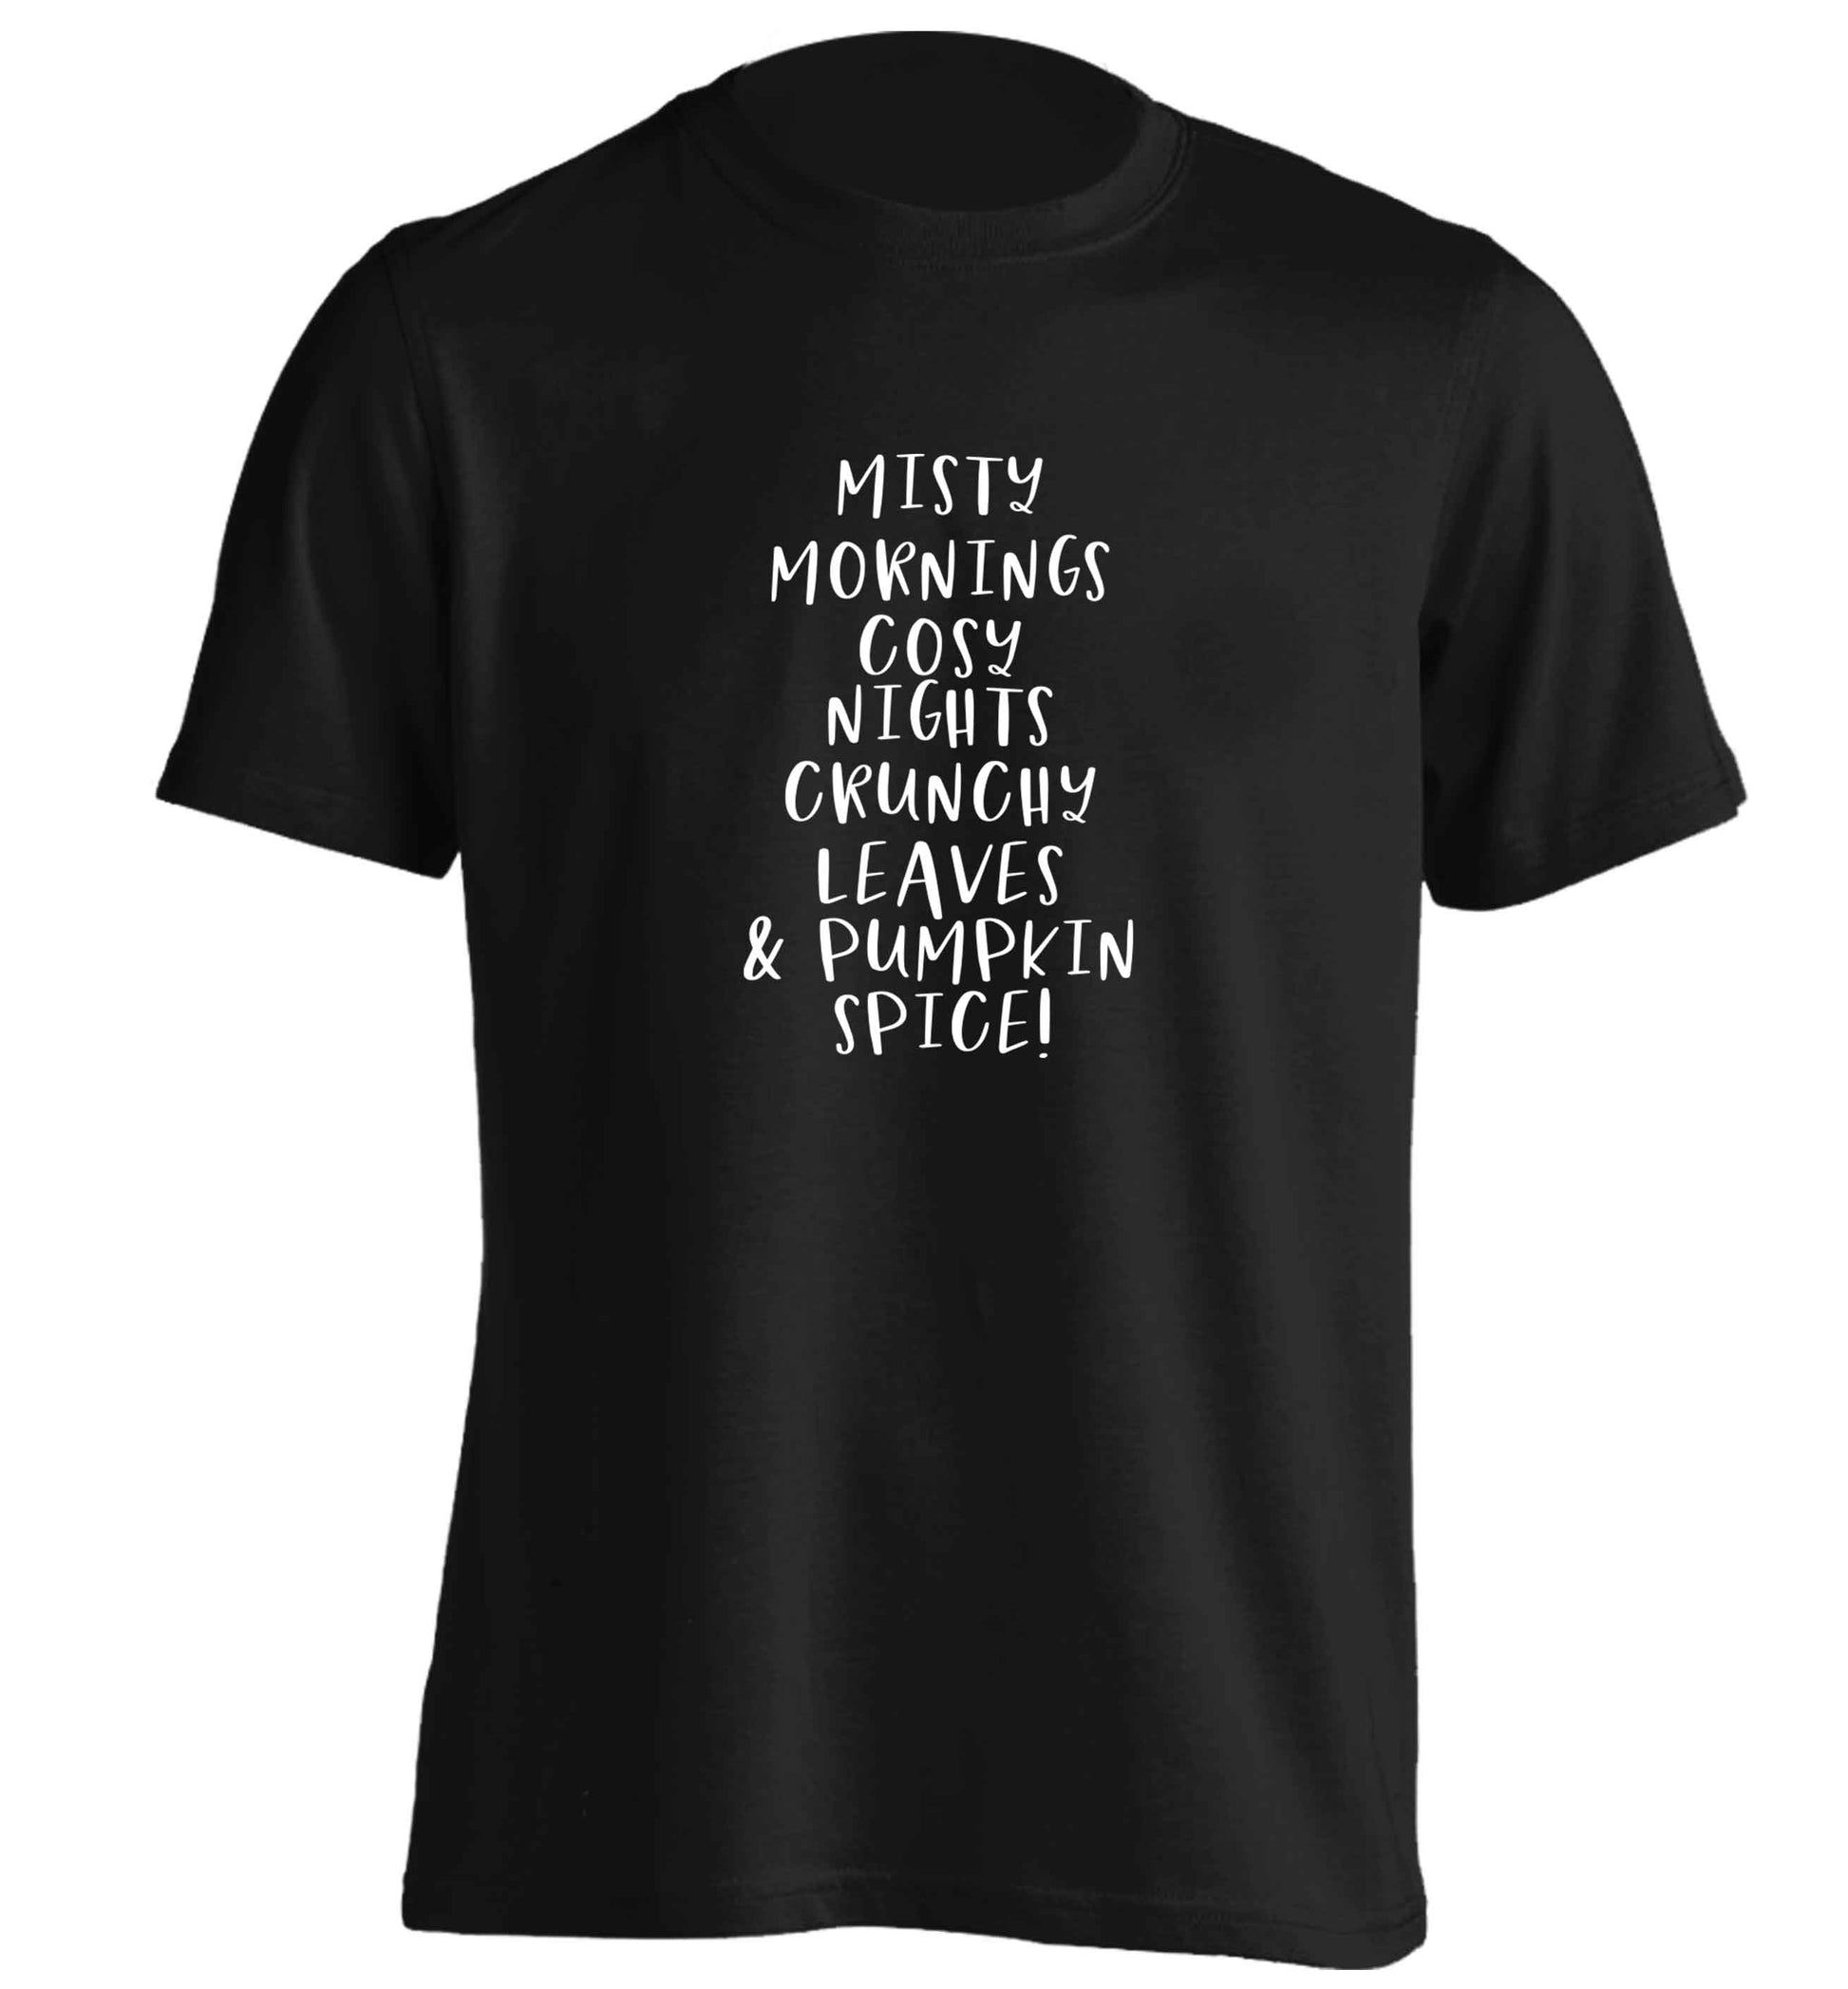 Misty Mornings adults unisex black Tshirt 2XL